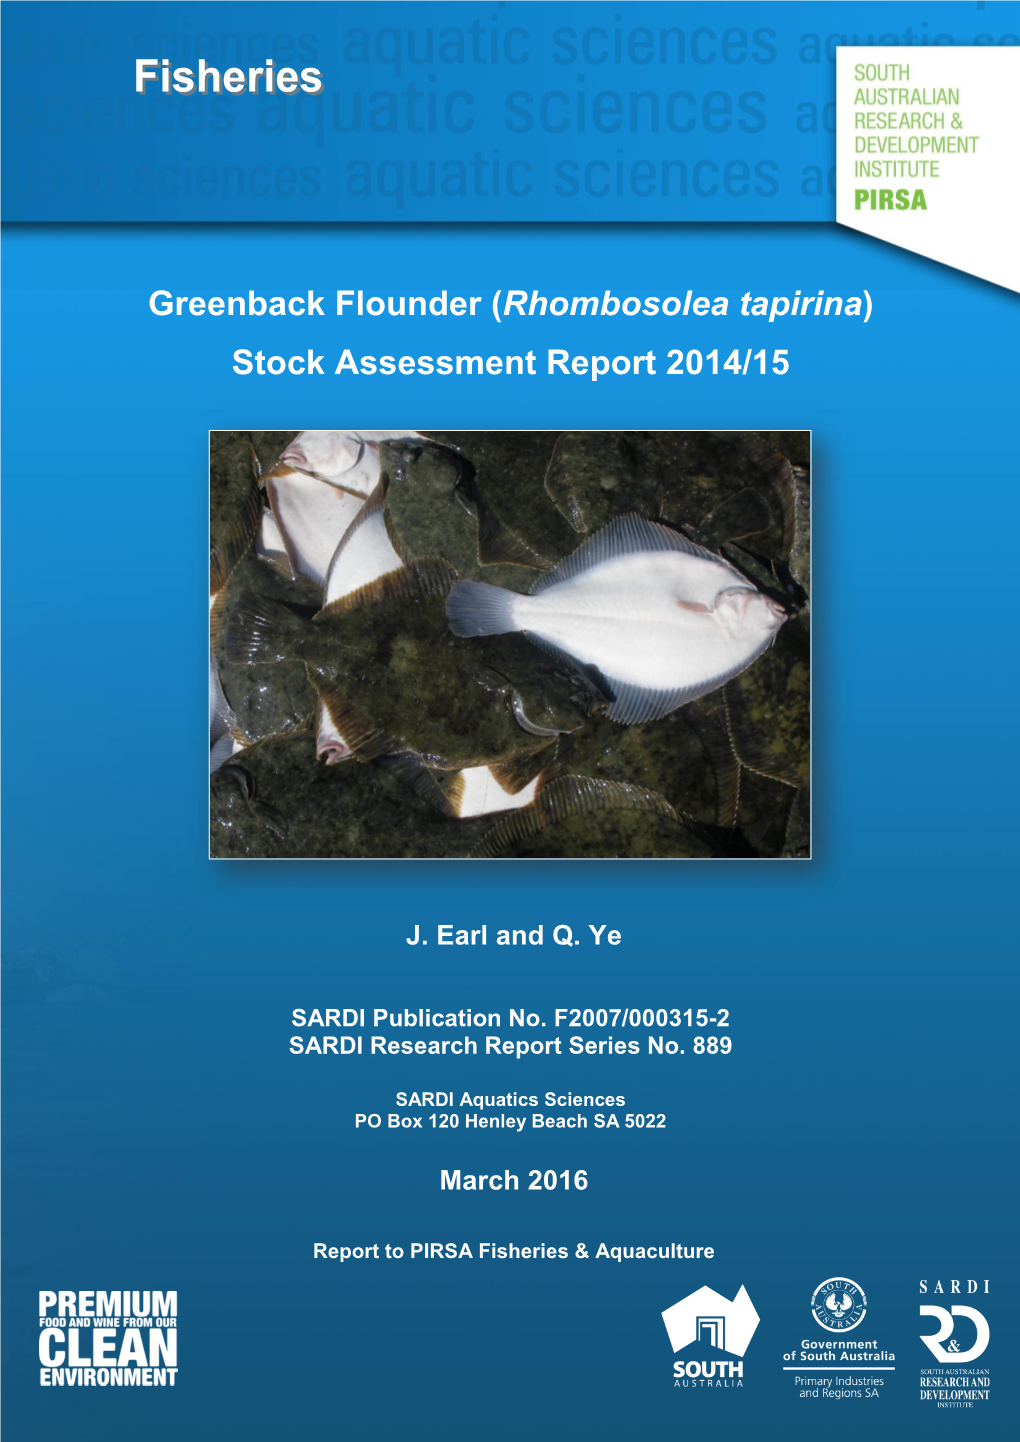 Greenback Flounder (Rhombosolea Tapirina) Stock Assessment Report 2014/15